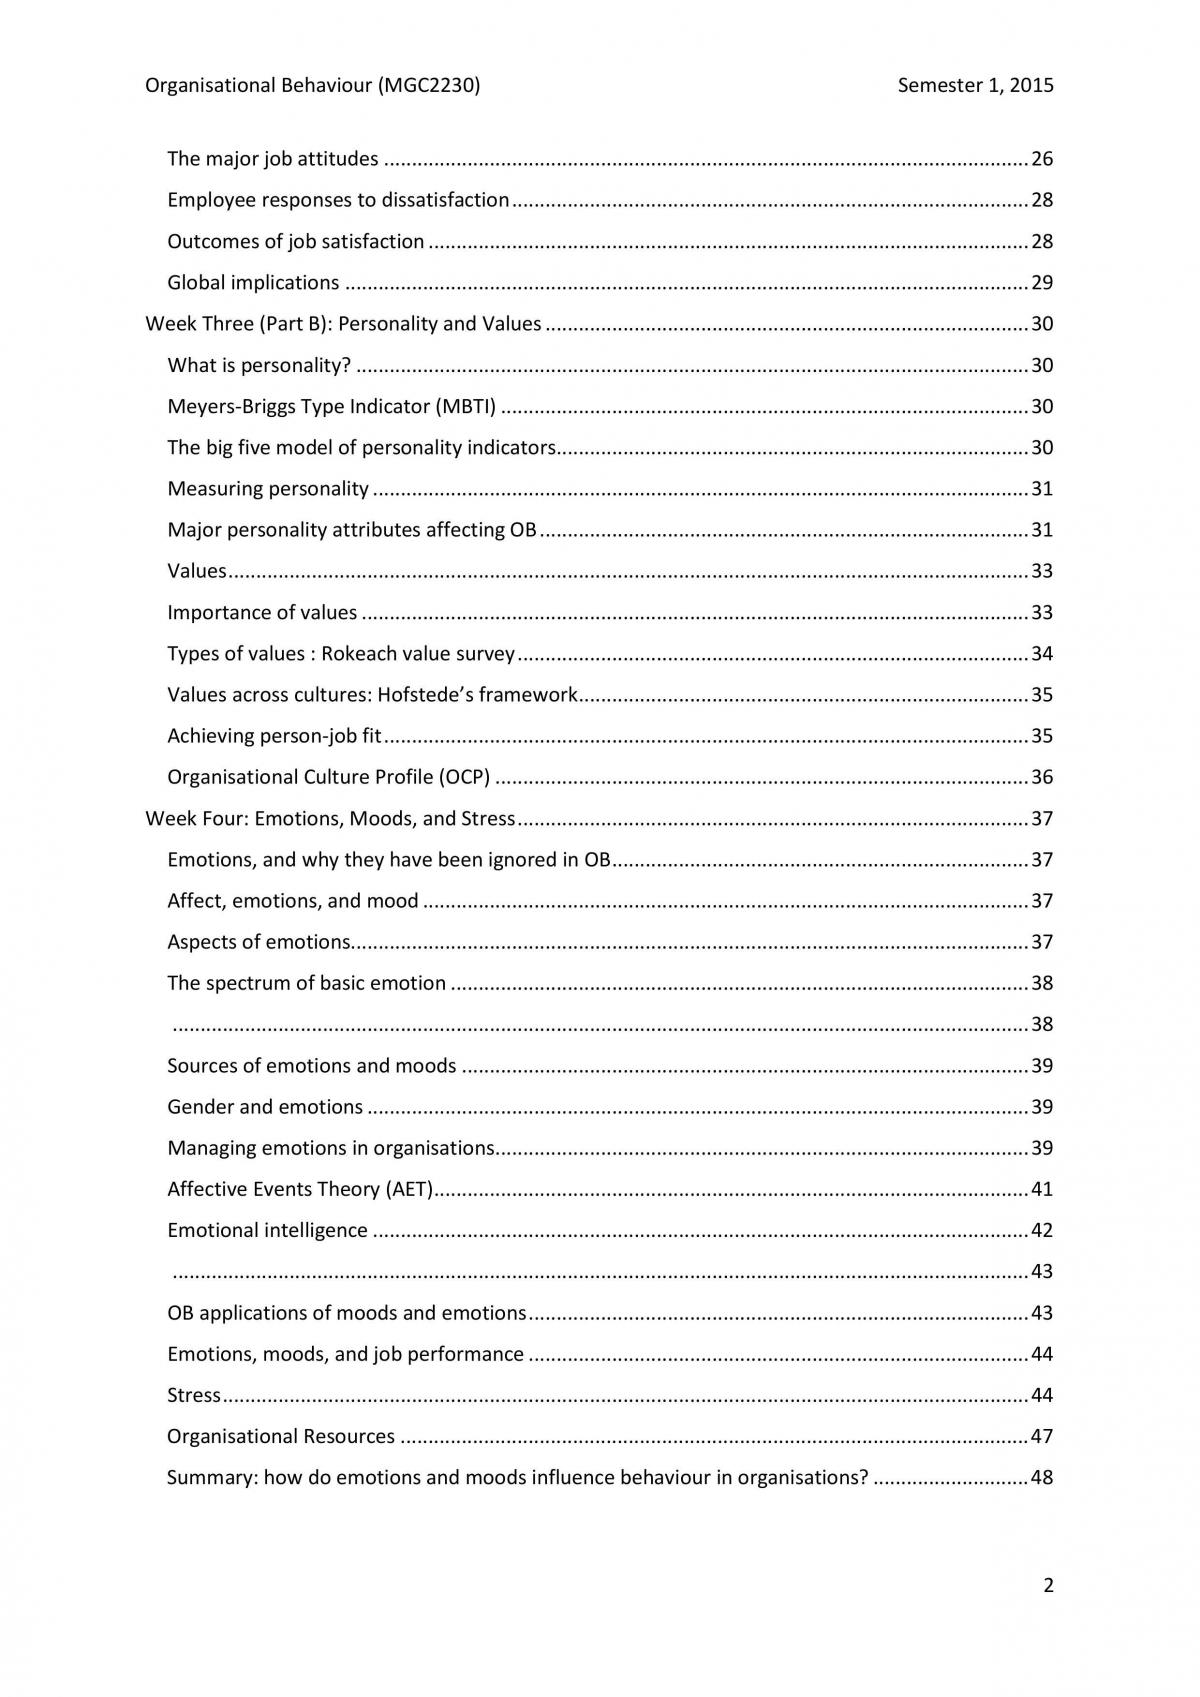 MGC2230 Organisational Behaviour Full Study Notes - Page 3